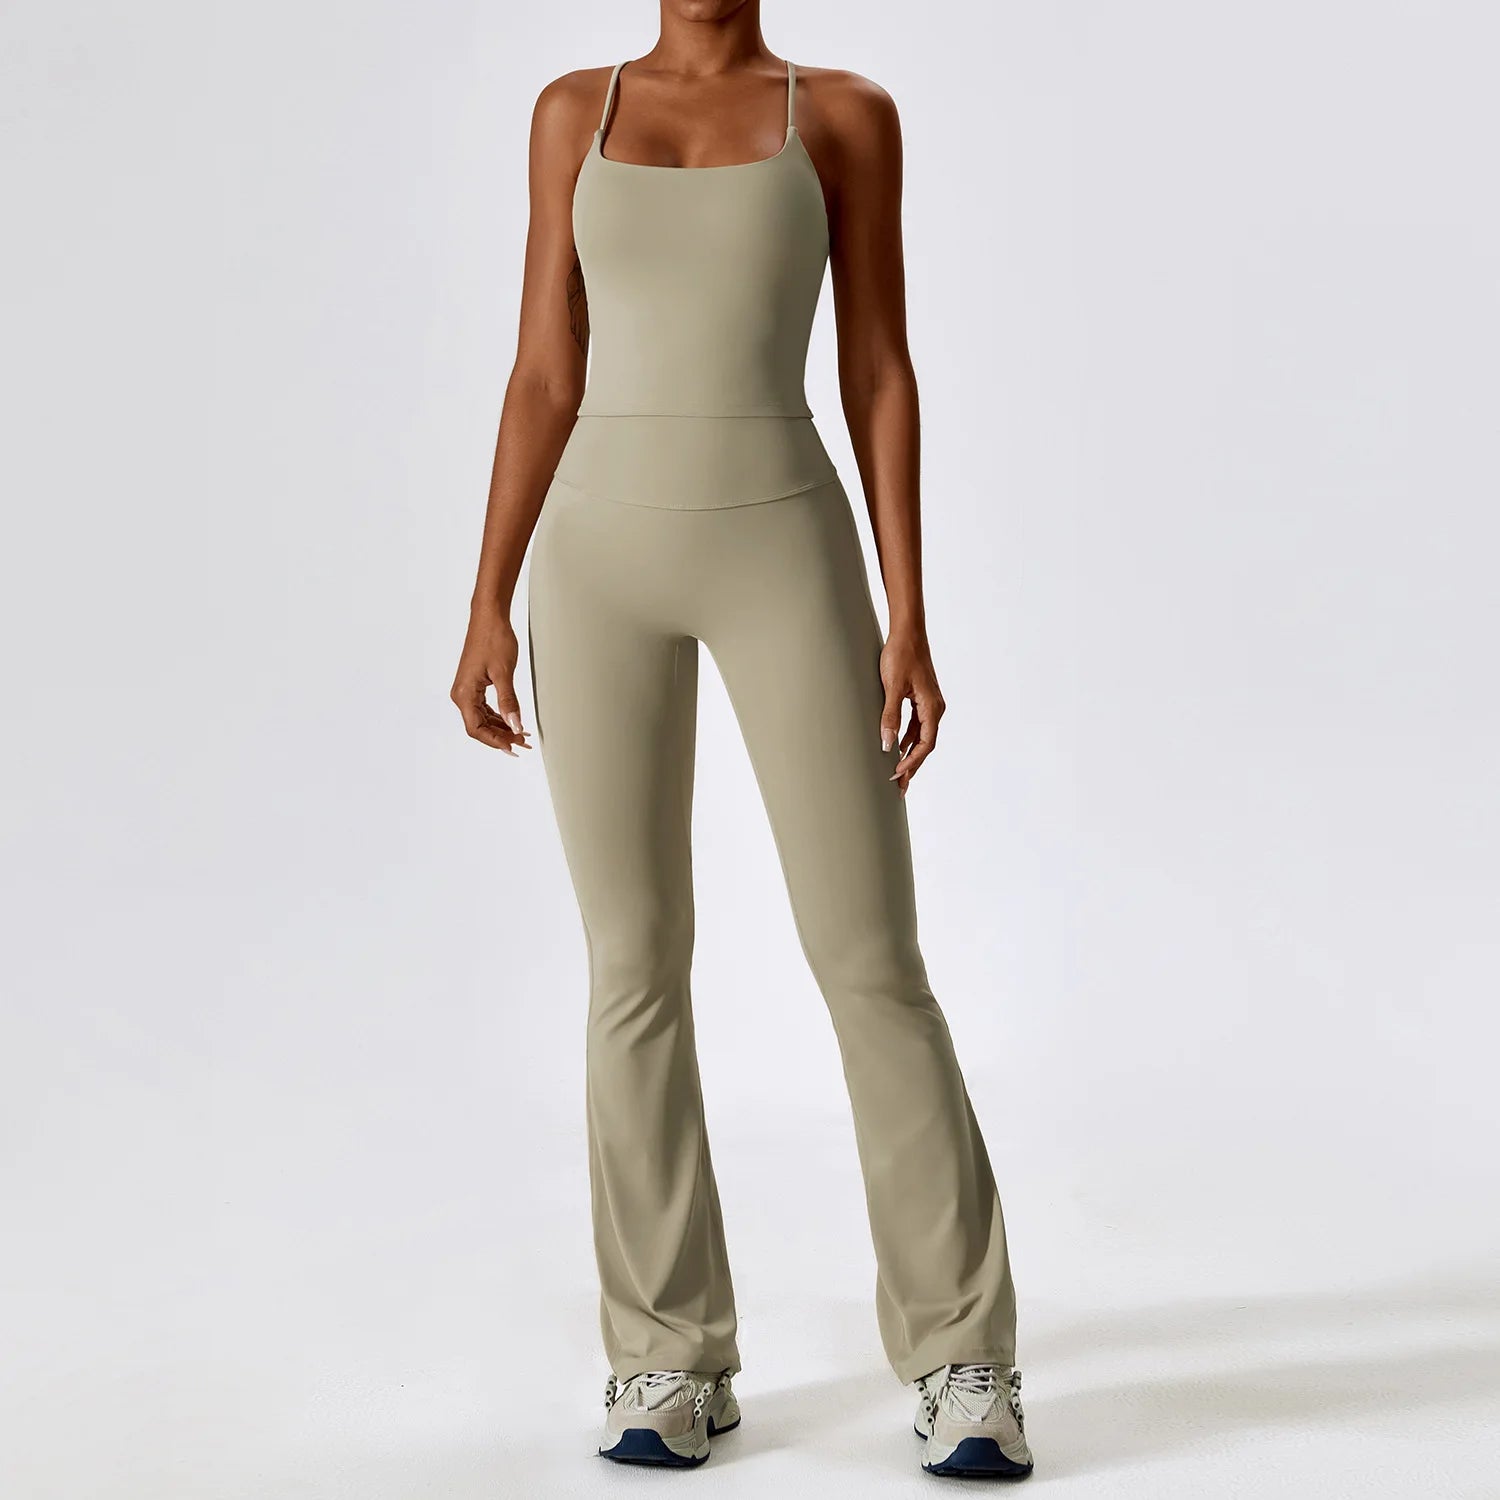 Yoga Set 2PCS Seamless Women Sportswear Workout Clothes Athletic Wear Gym Legging Fitness Bra Crop Top Long Sleeve Sports Suits